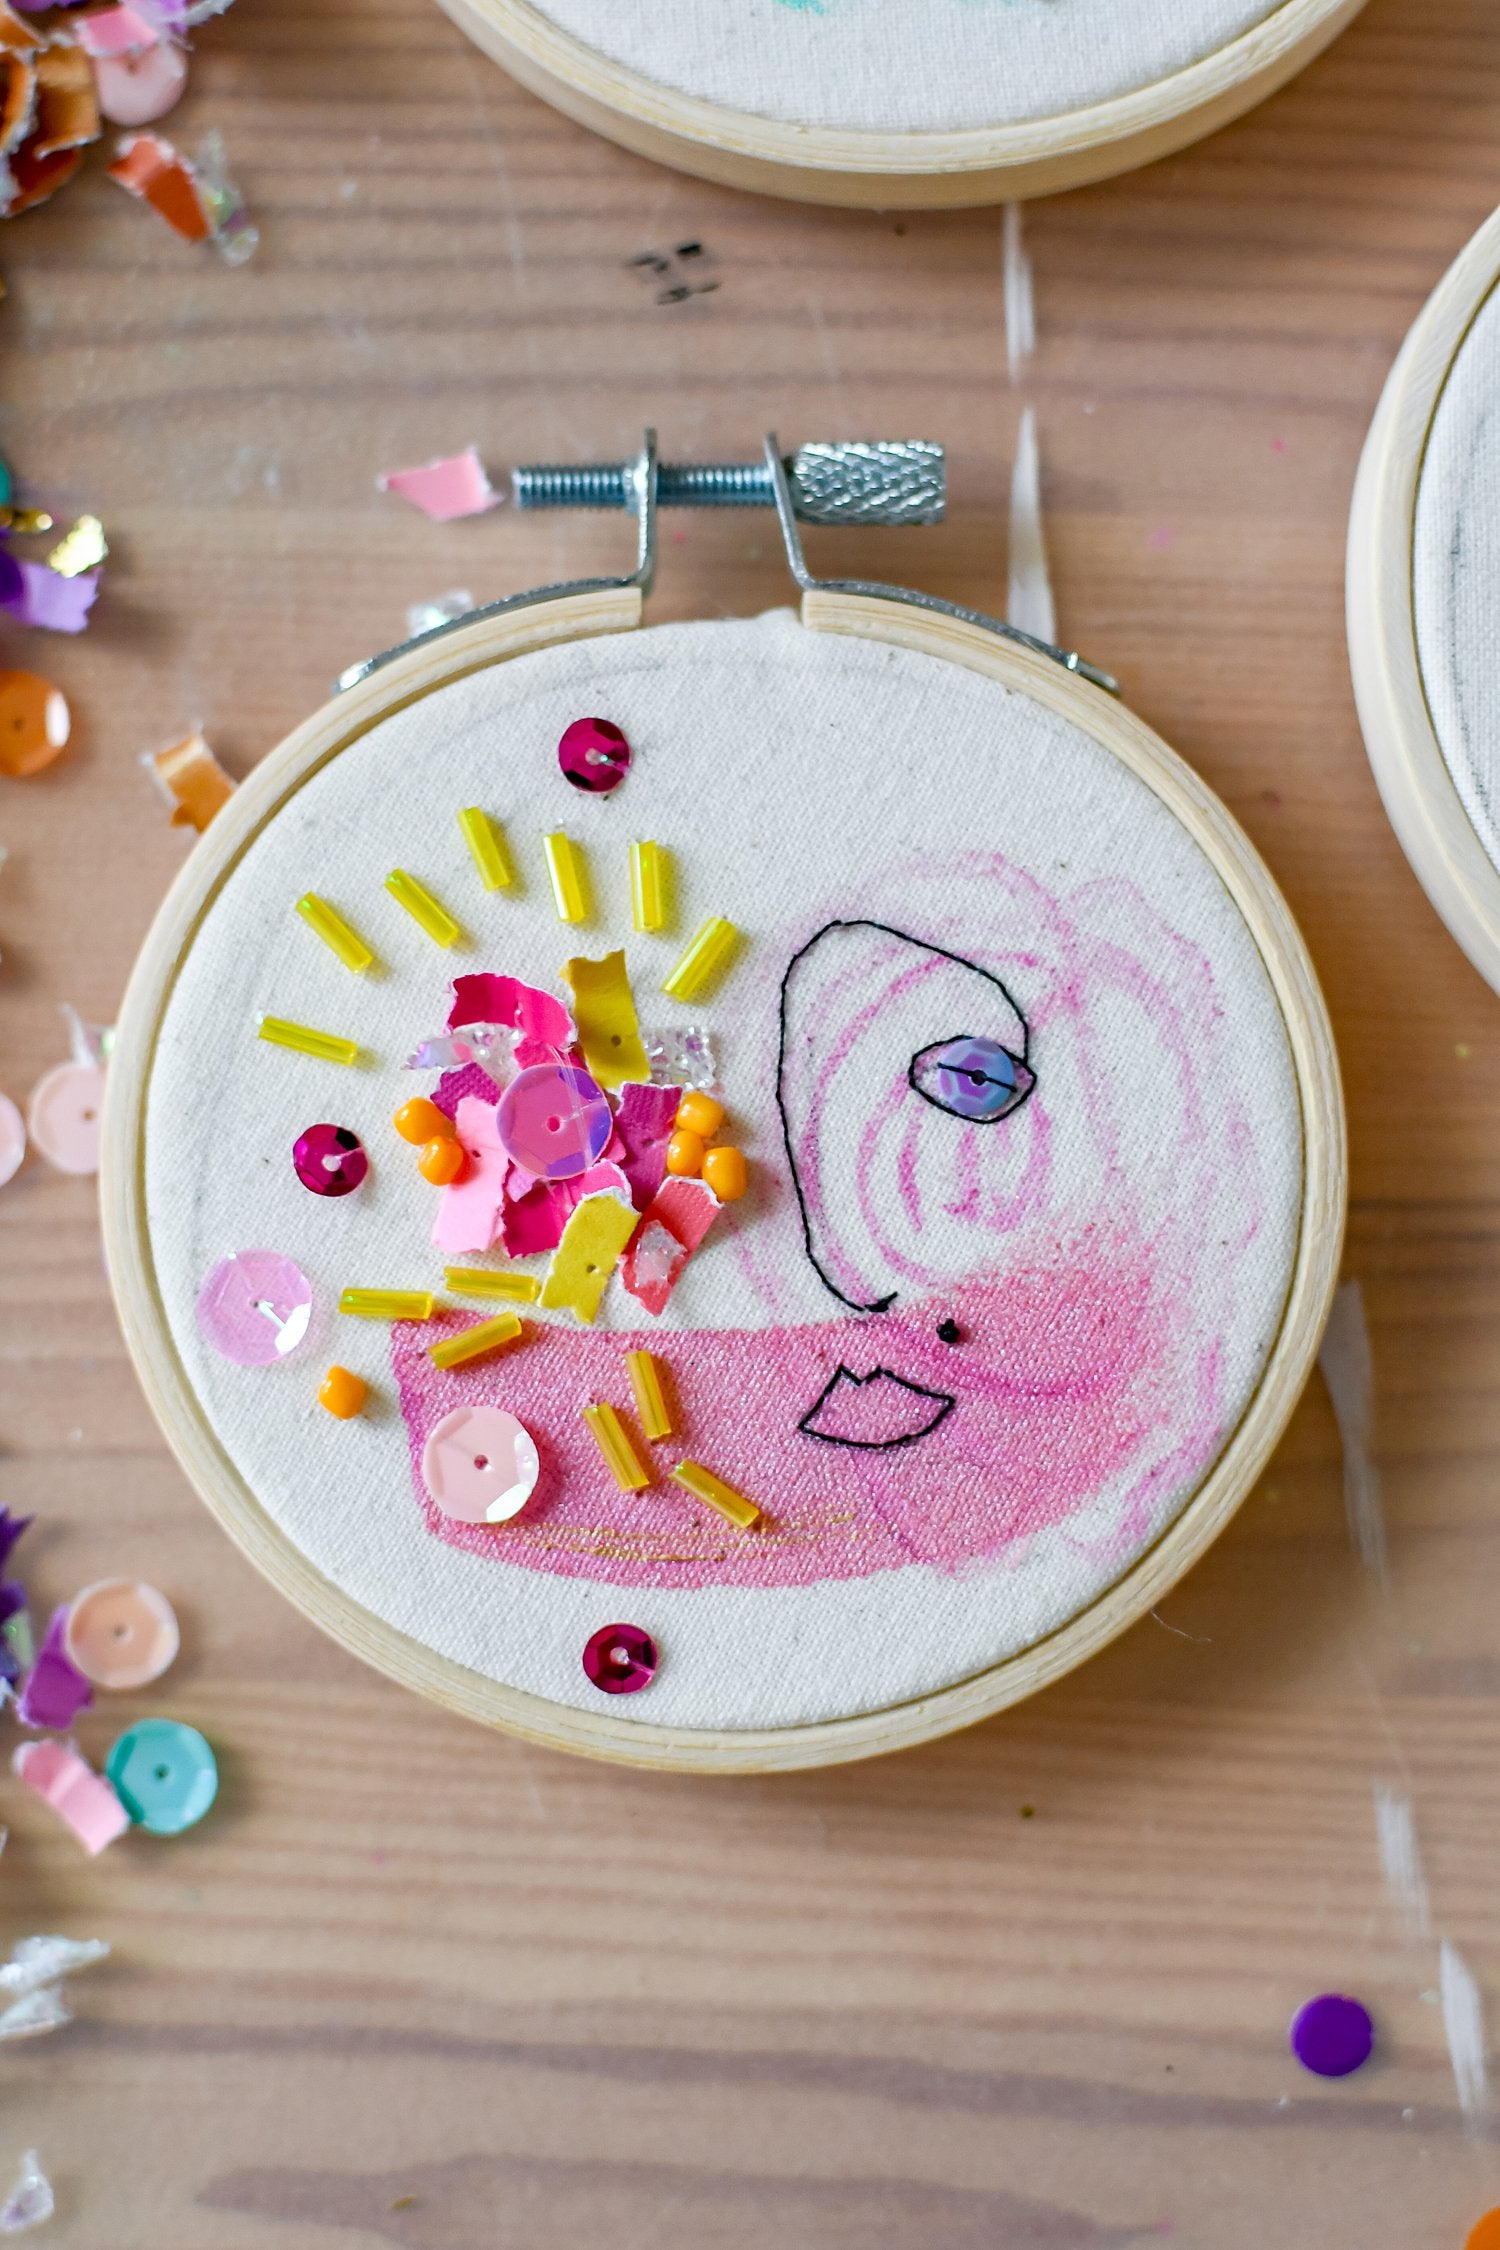 I Am Confetti Mixed Media Embroidery by Jessica Serra Huizenga